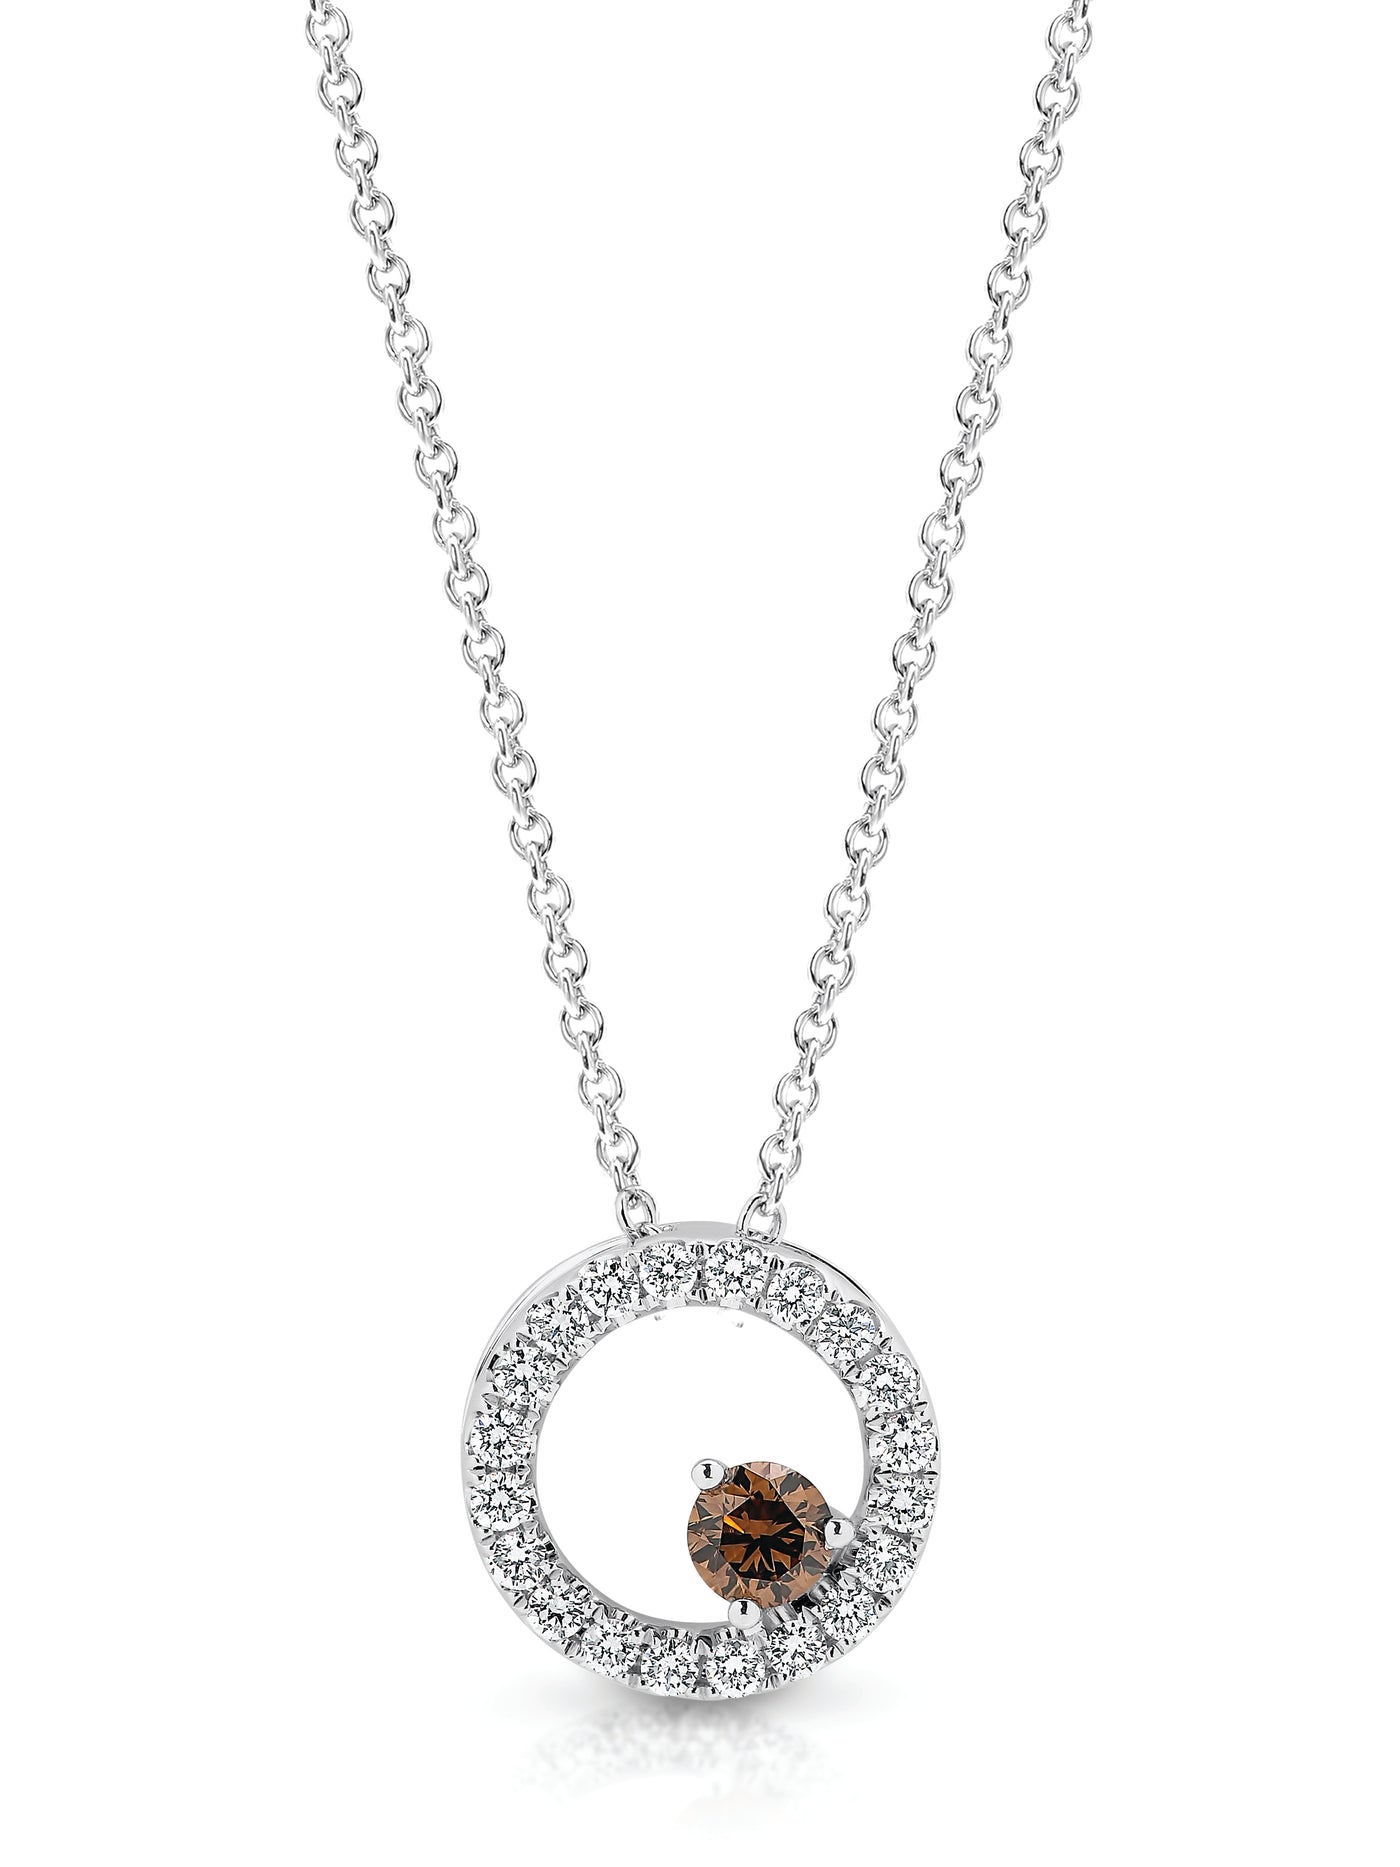 Australian Chocolate Diamonds - "Circle of Love Pendant"